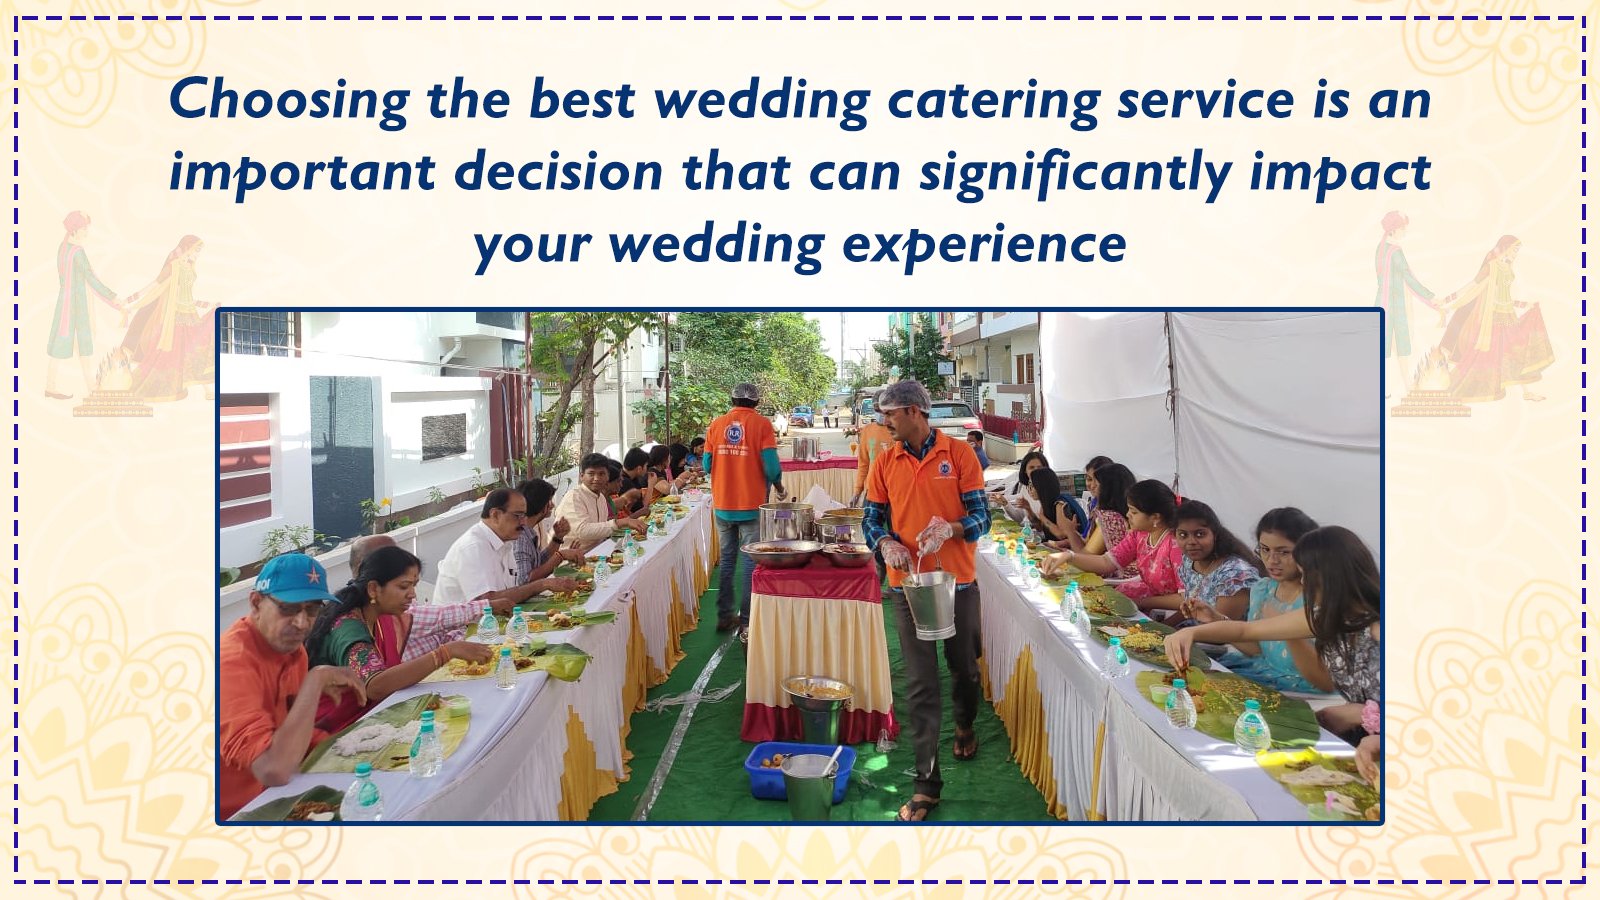 Best wedding catering service